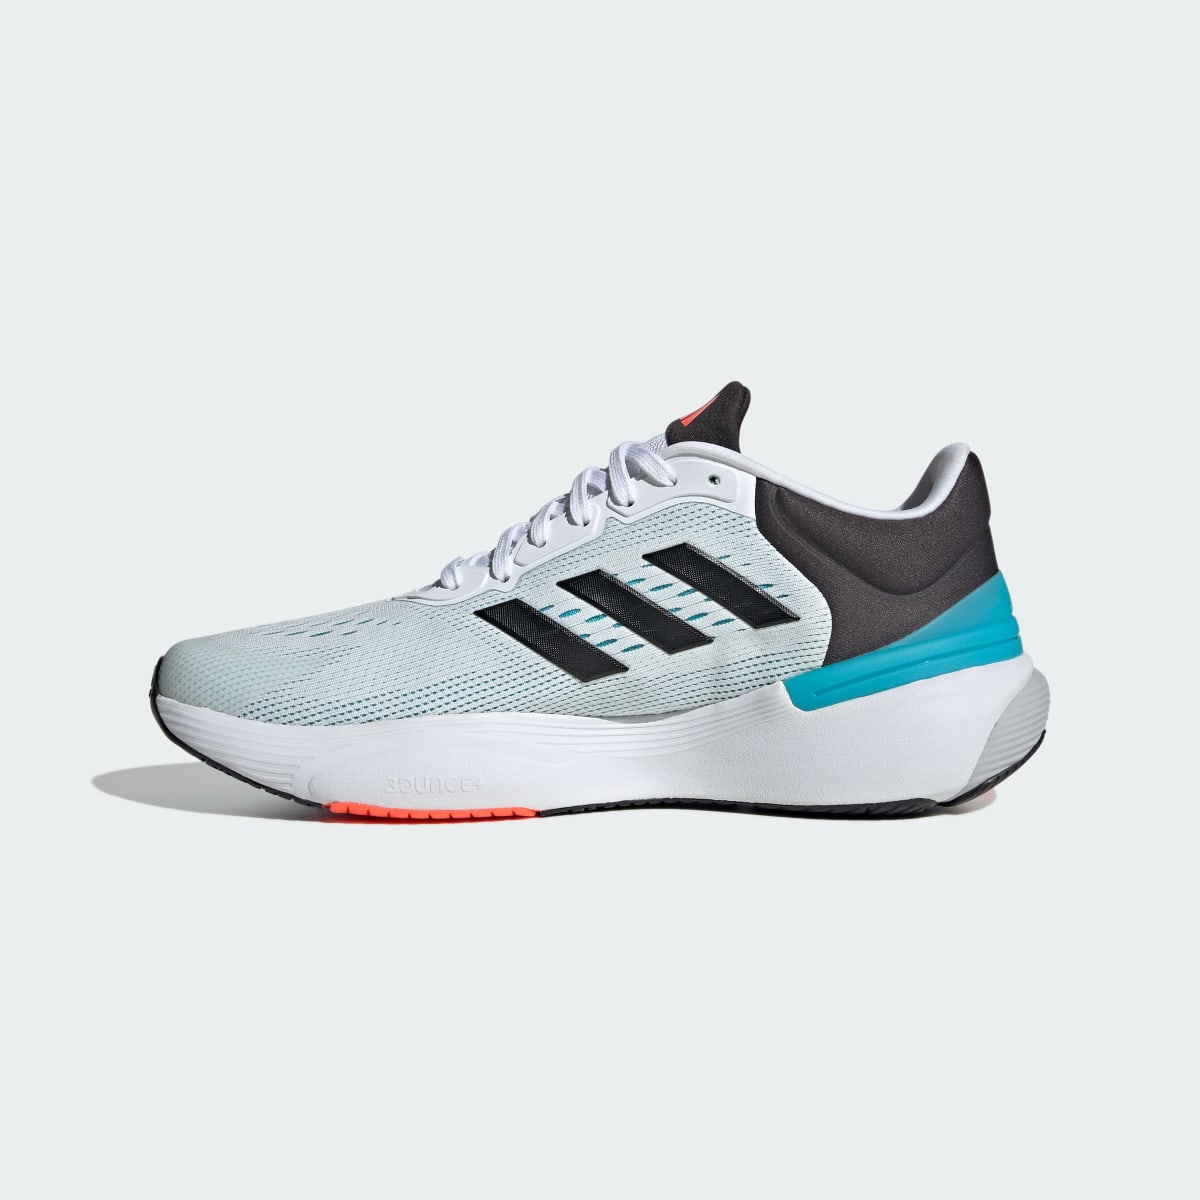 Adidas Response Super 3.0 Shoes. 7